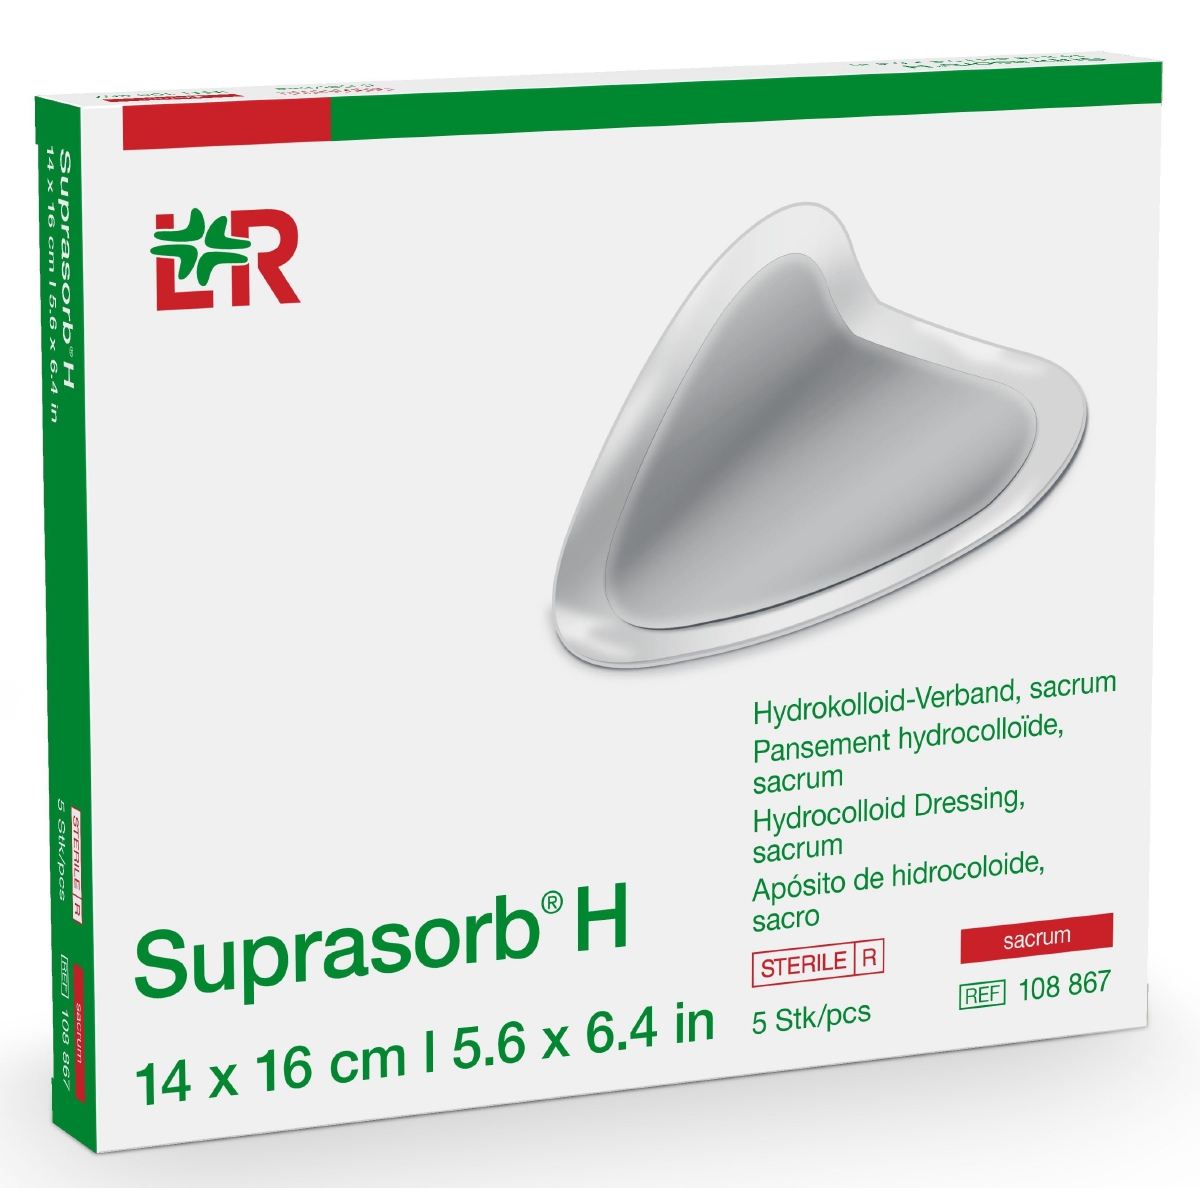 Suprasorb H Hydrokolloid-Verband steril sacrum 14x16cm 5 Stk